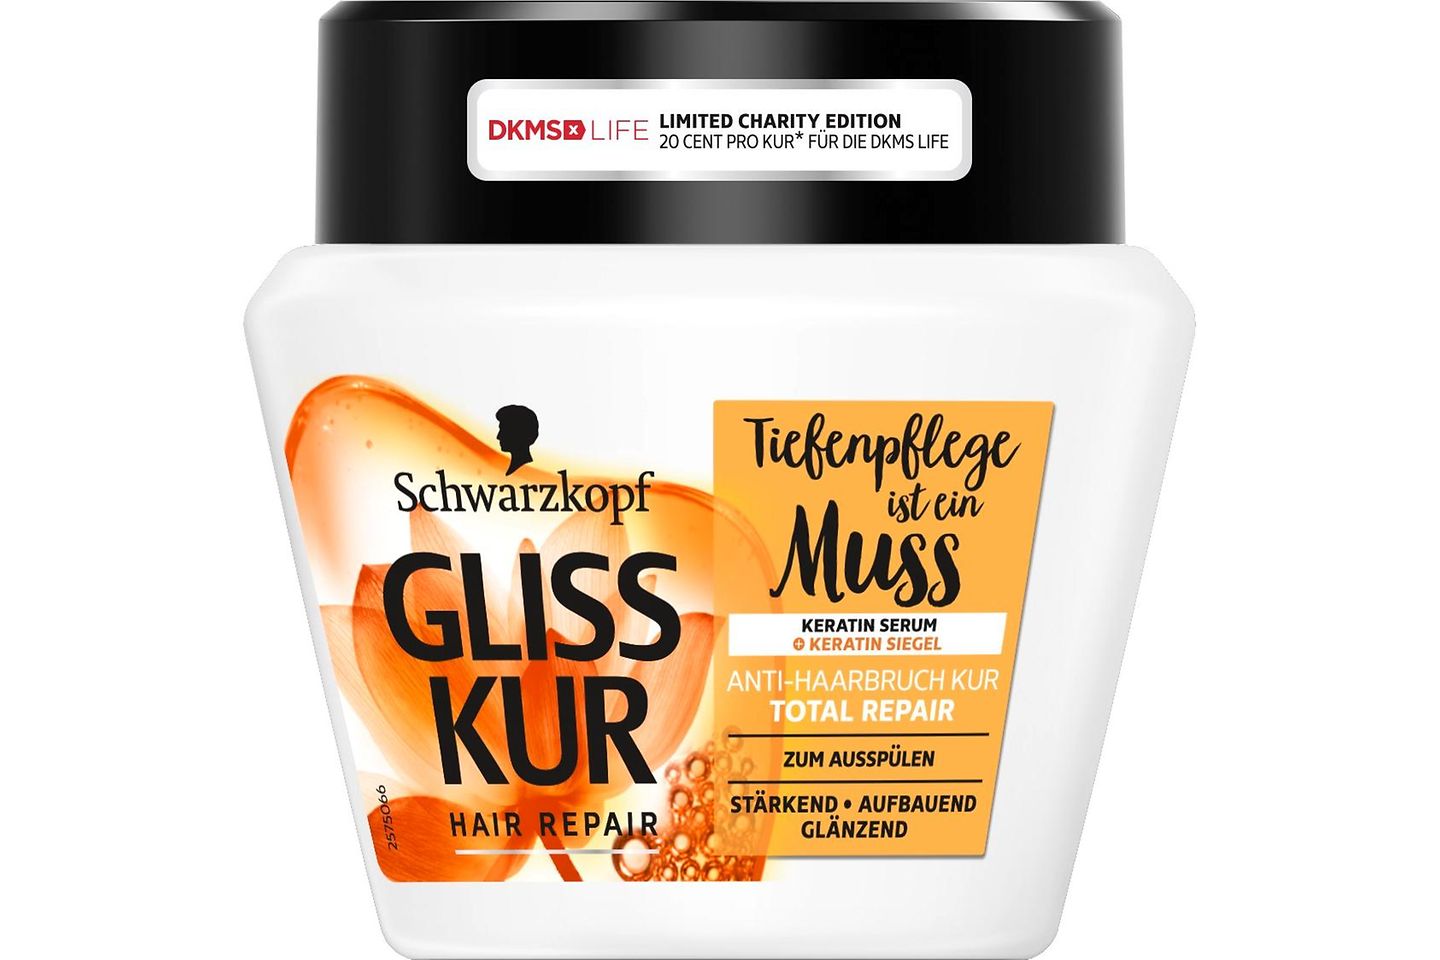 Gliss Kur Total Repair Anti-Haarbruch Kur DKMS Life Limited Charity Edition